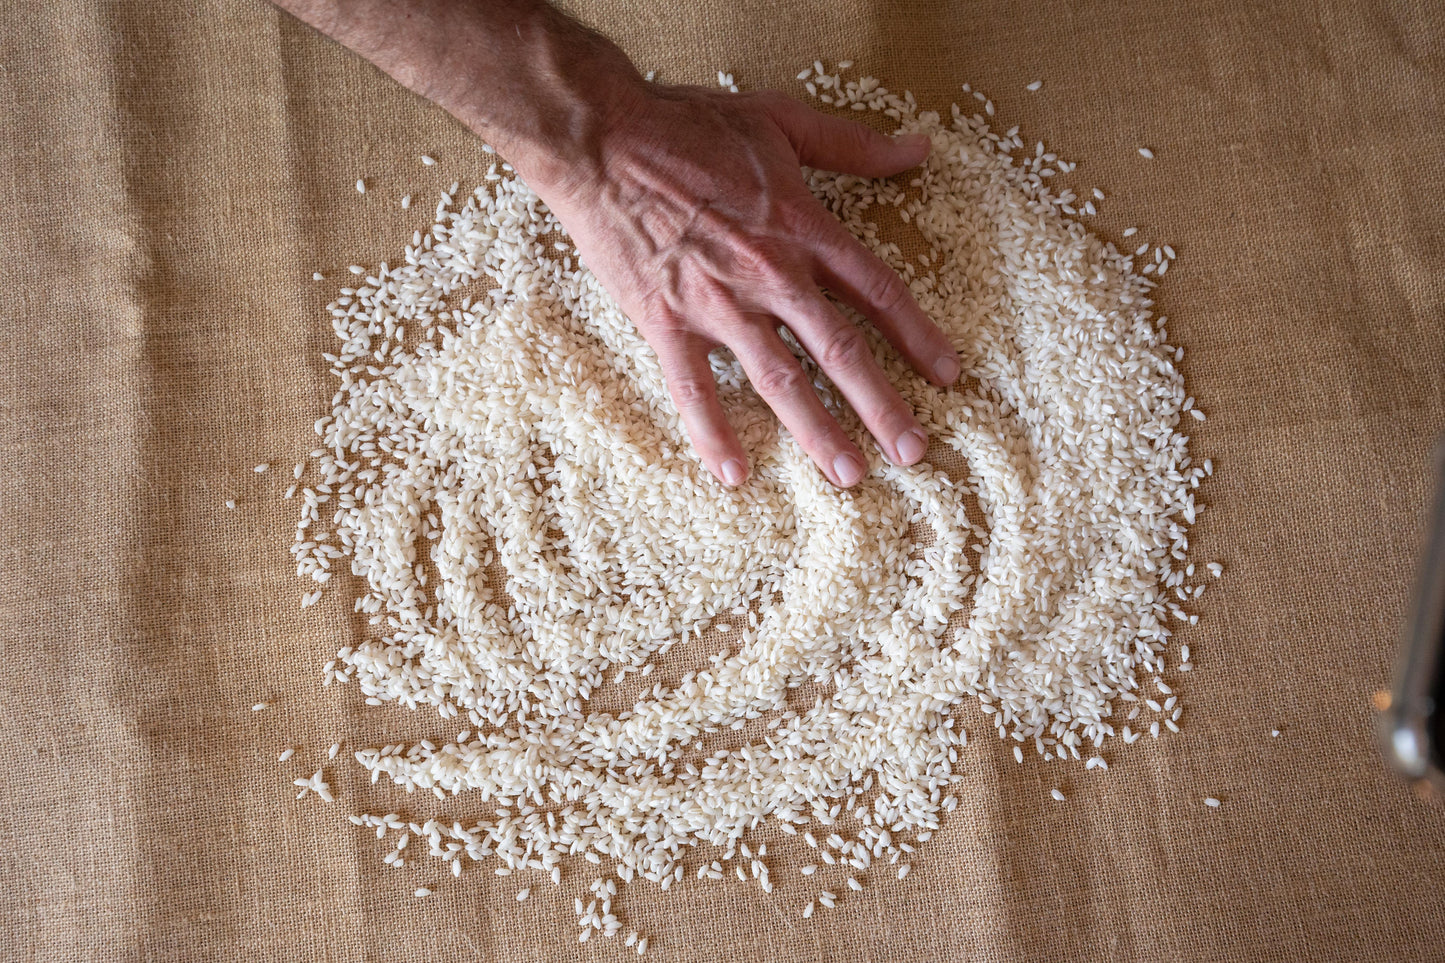 Organic vialone nano rice